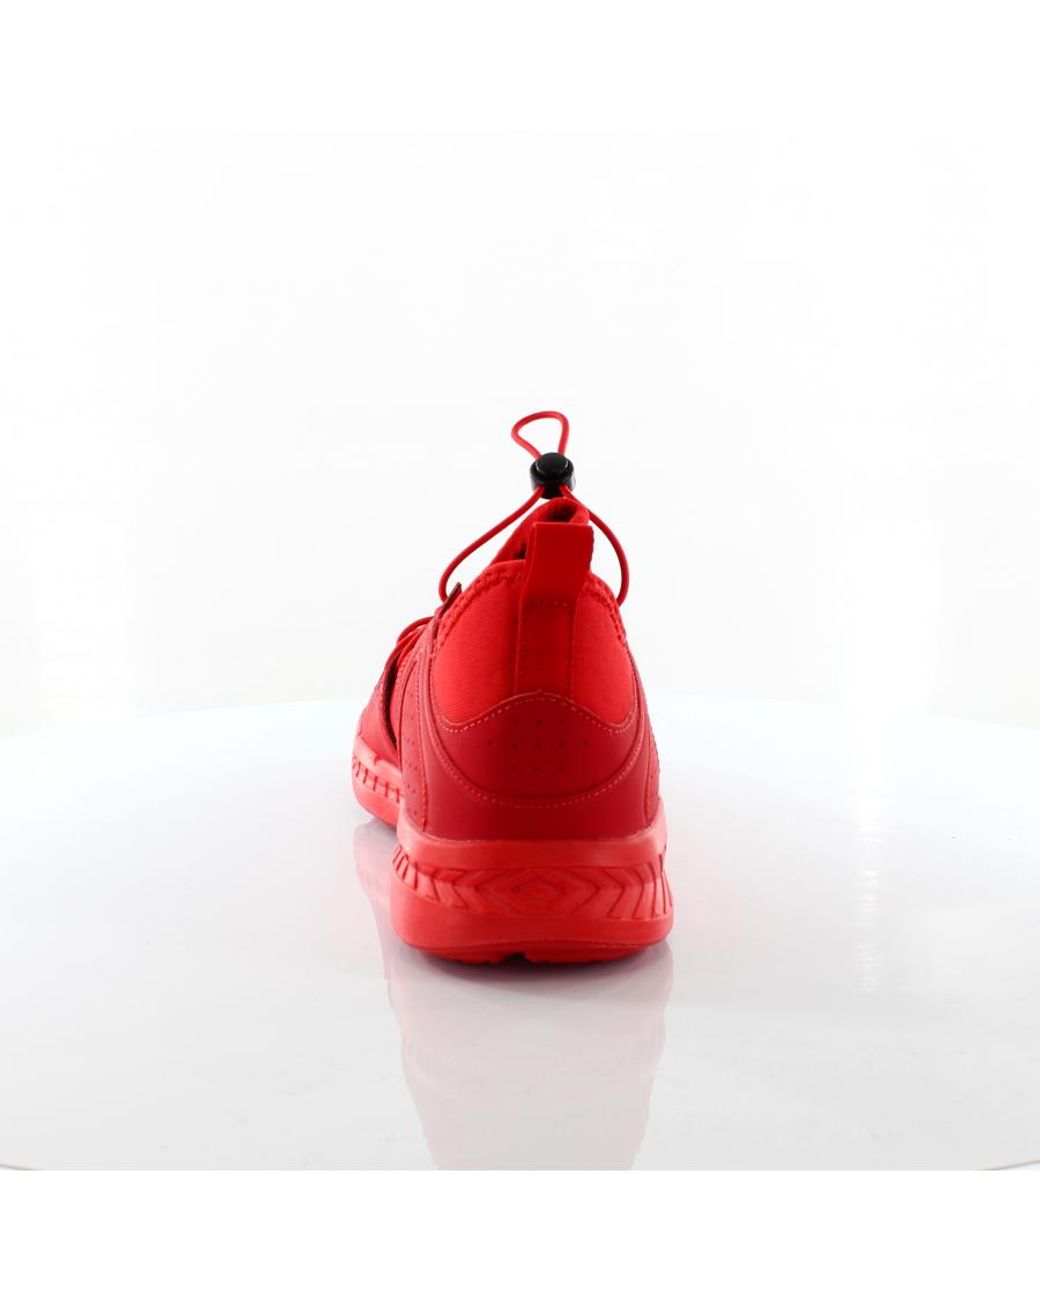 PUMA Blaze Ignite Future Minimal Slip On Toggle Red Trainers 362289 02 for  Men | Lyst UK